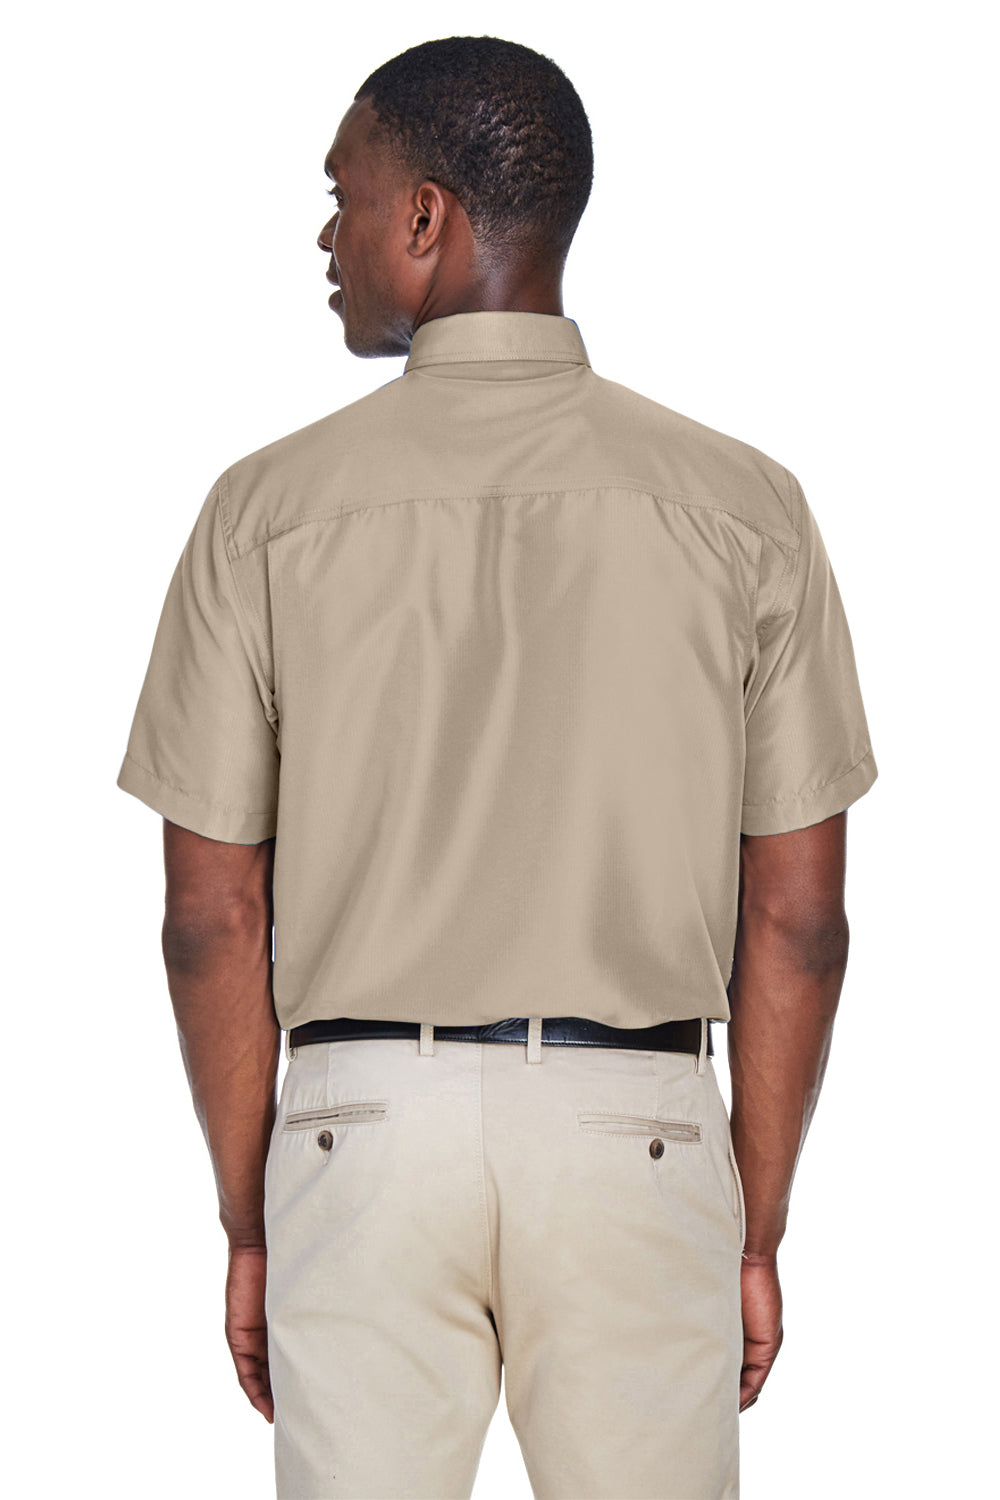 Harriton M580 Mens Key West Performance Short Sleeve Button Down Shirt w/ Double Pockets Khaki Brown Back